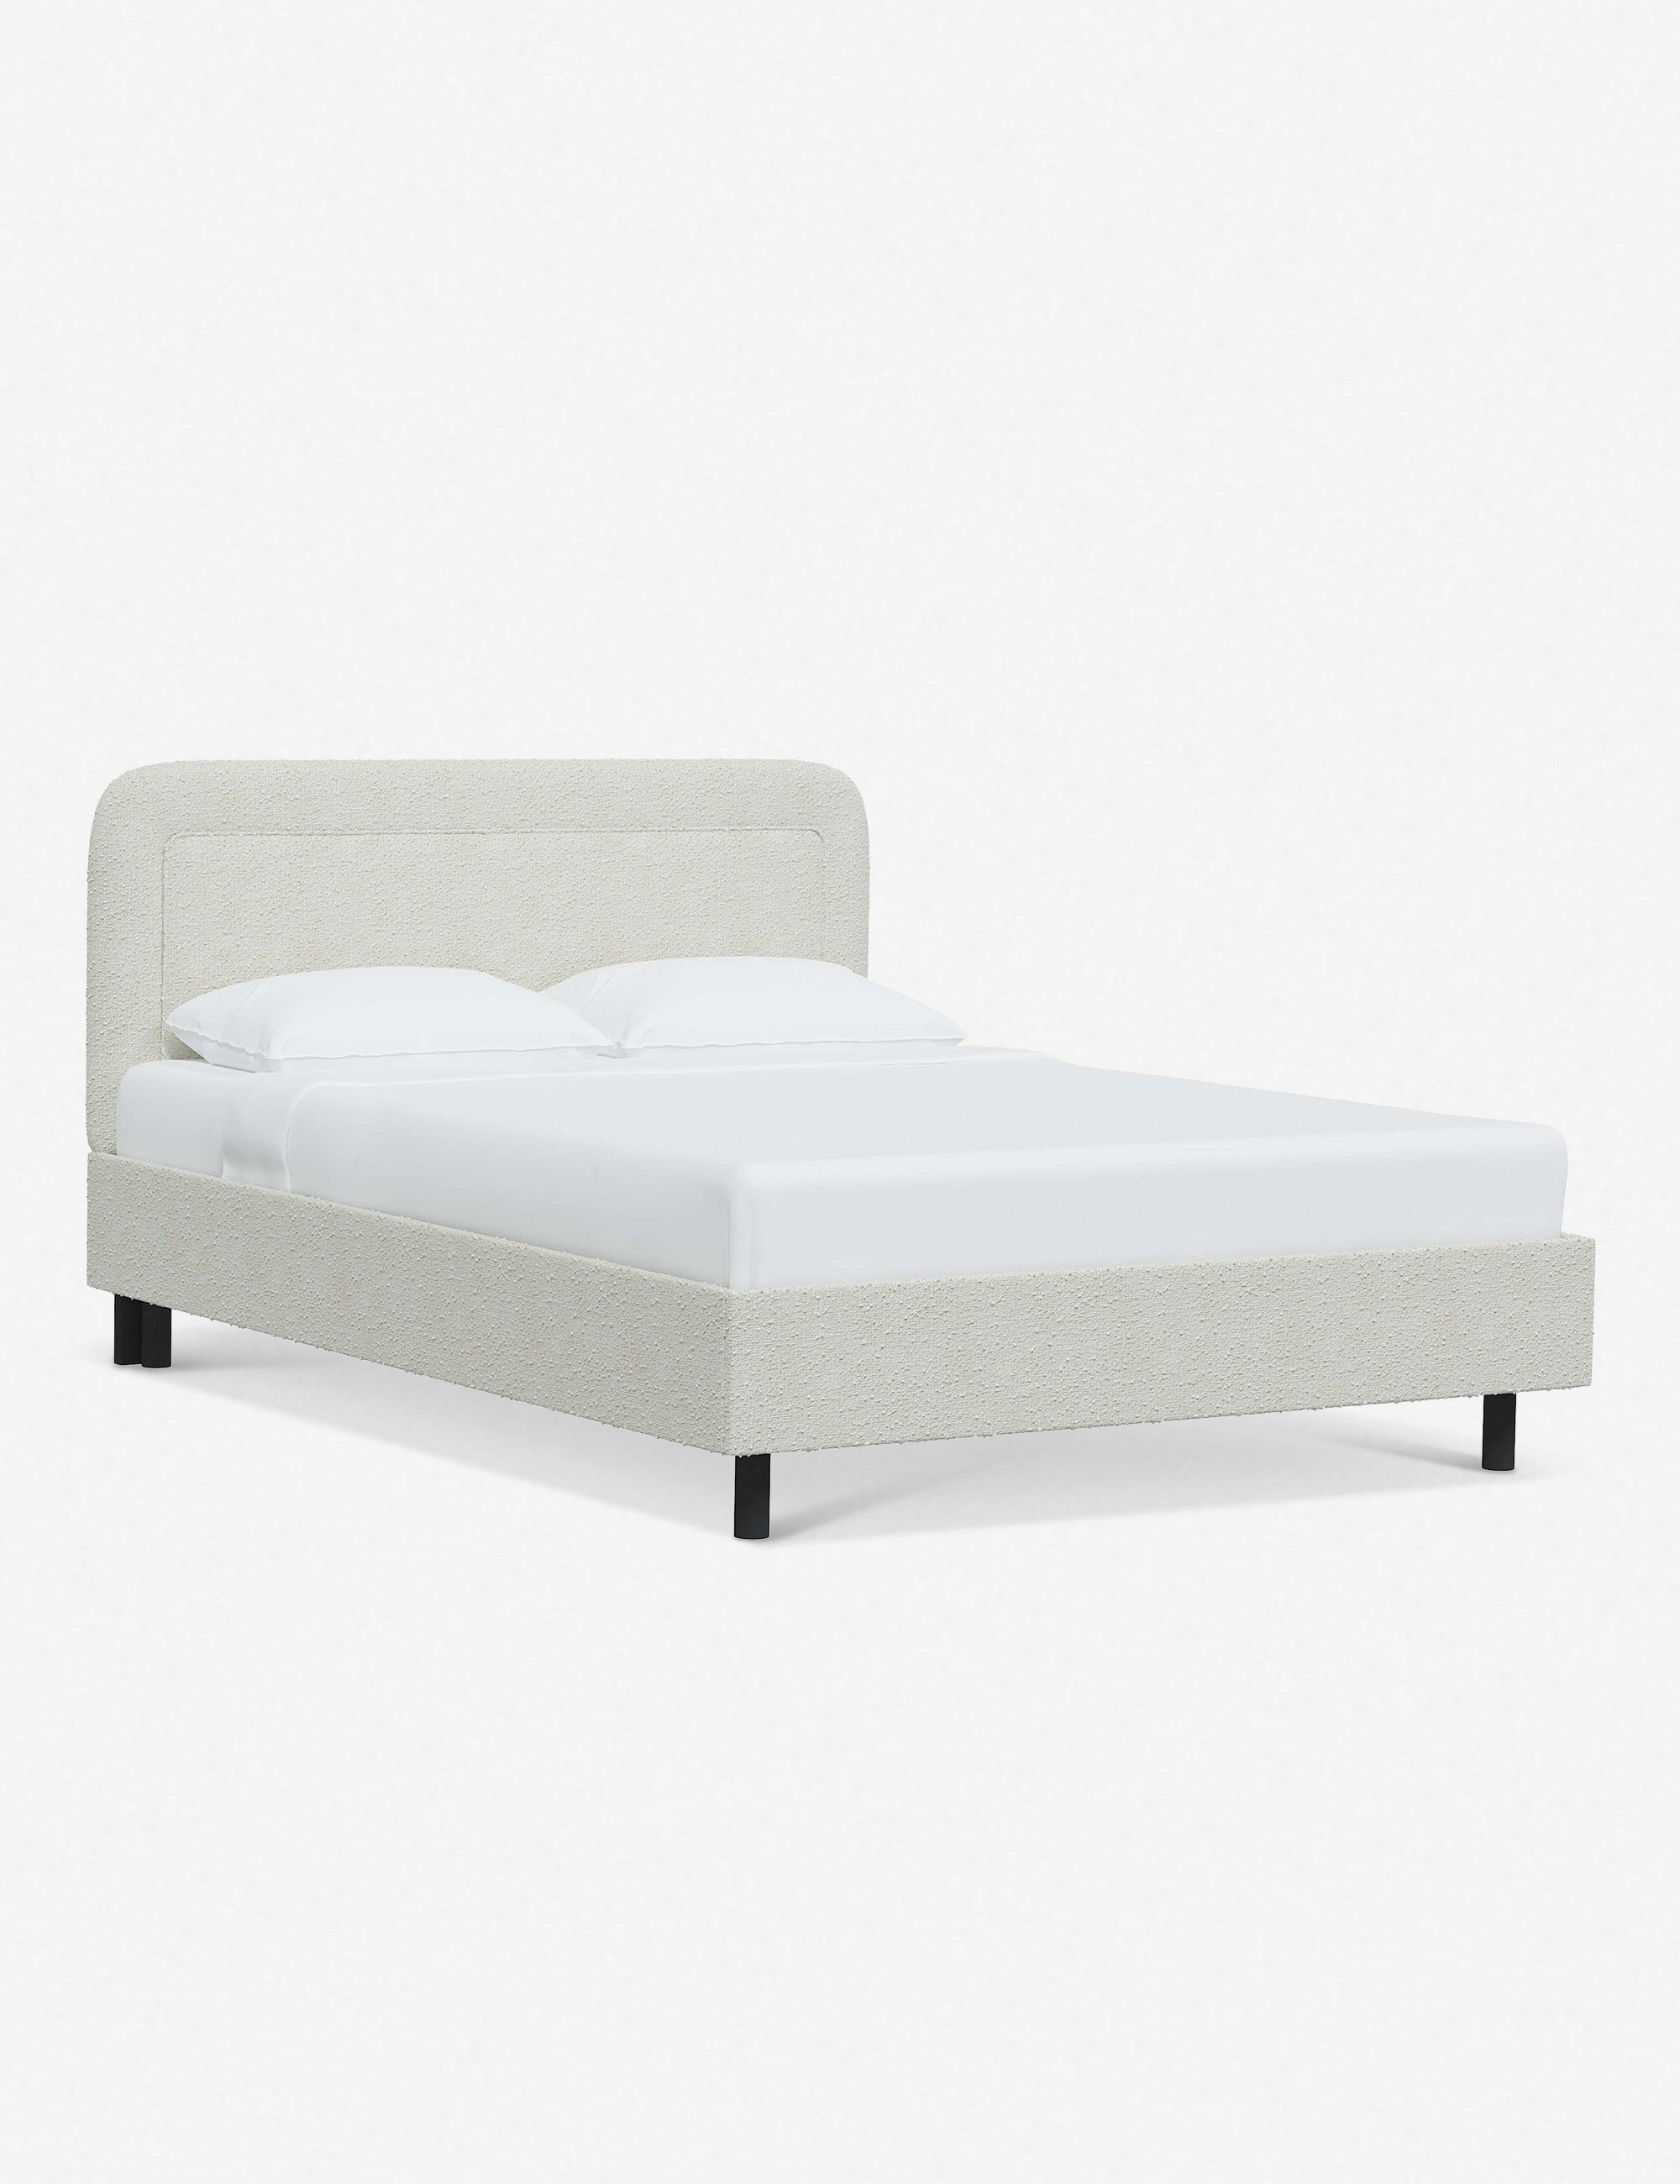 Gwendolyn Platform Bed - Image 1